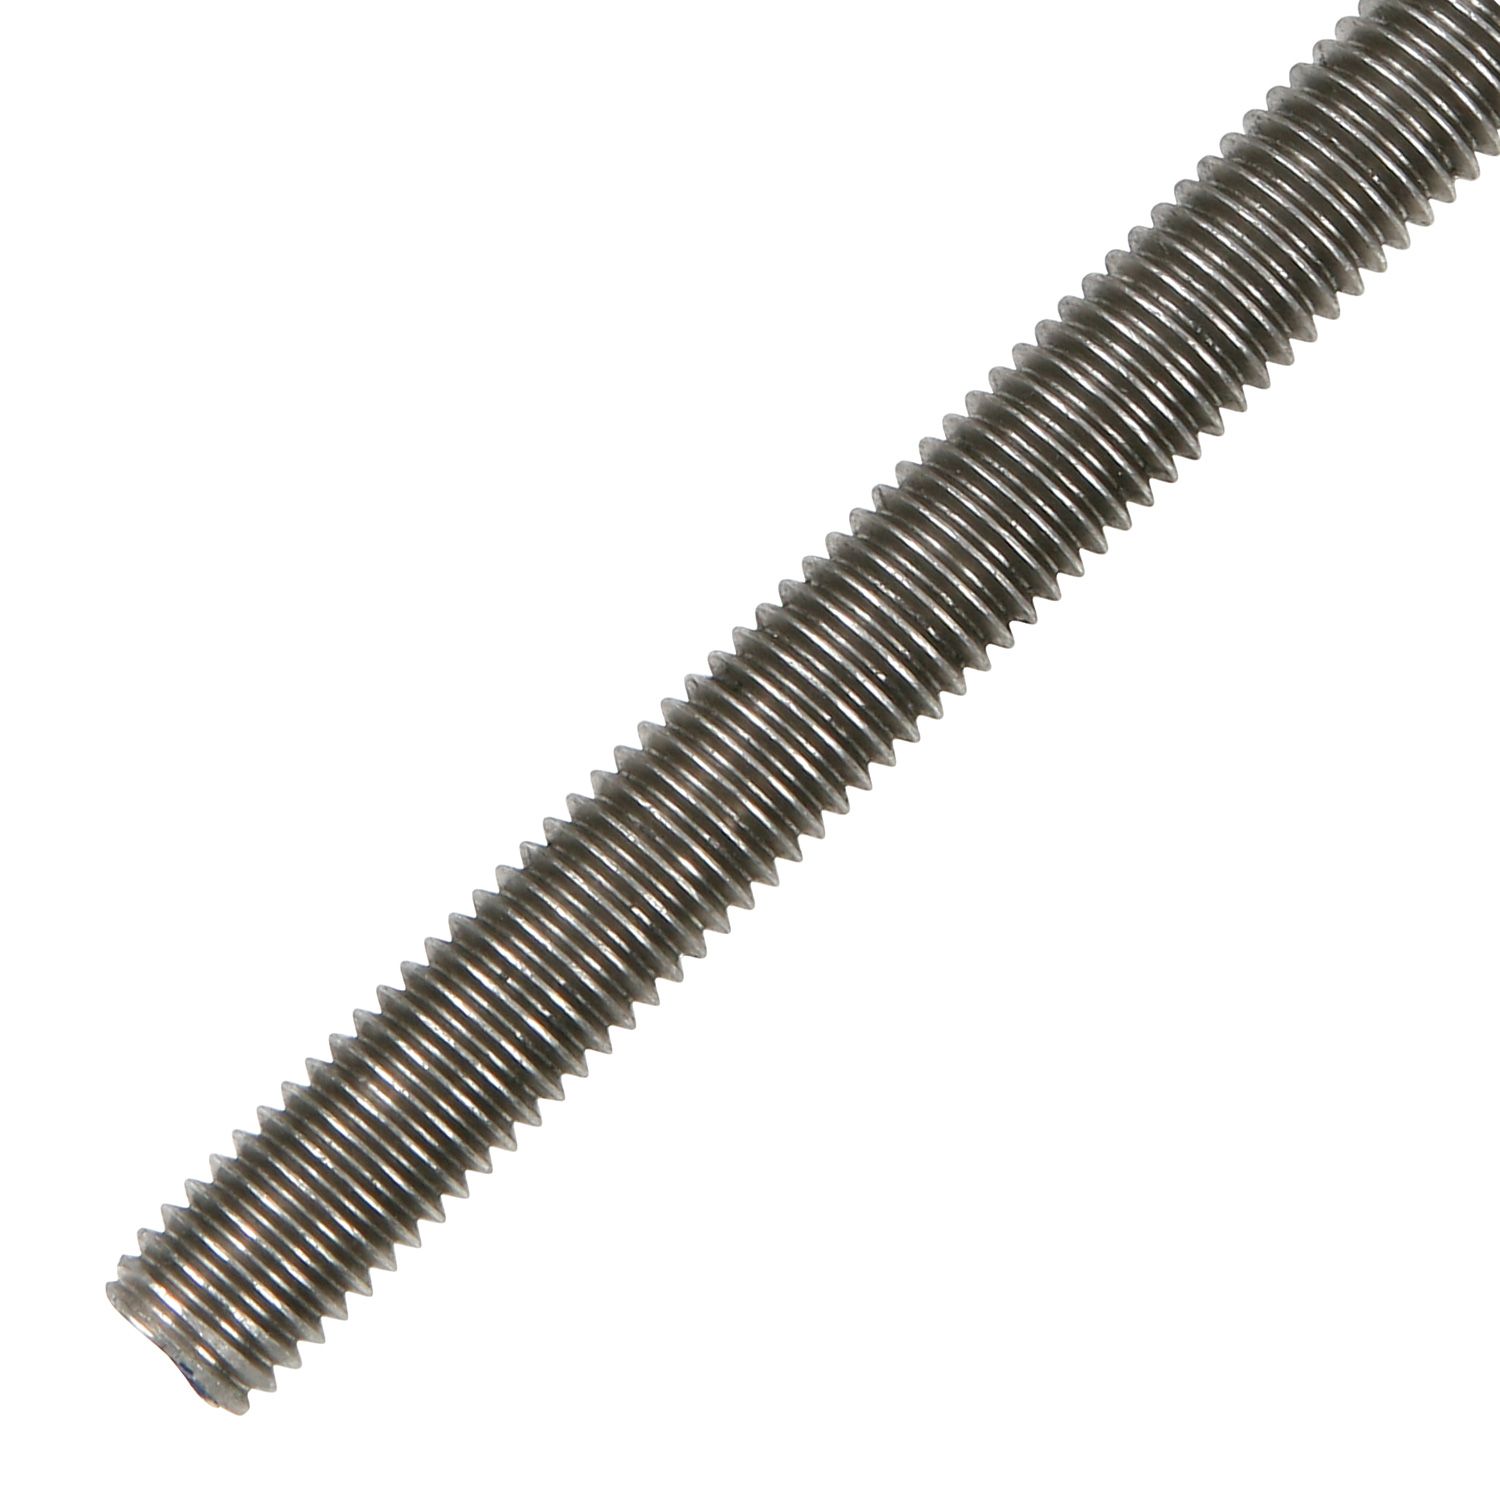 9/16-12 x 339; Plain 304 Stainless Steel Threaded Rod